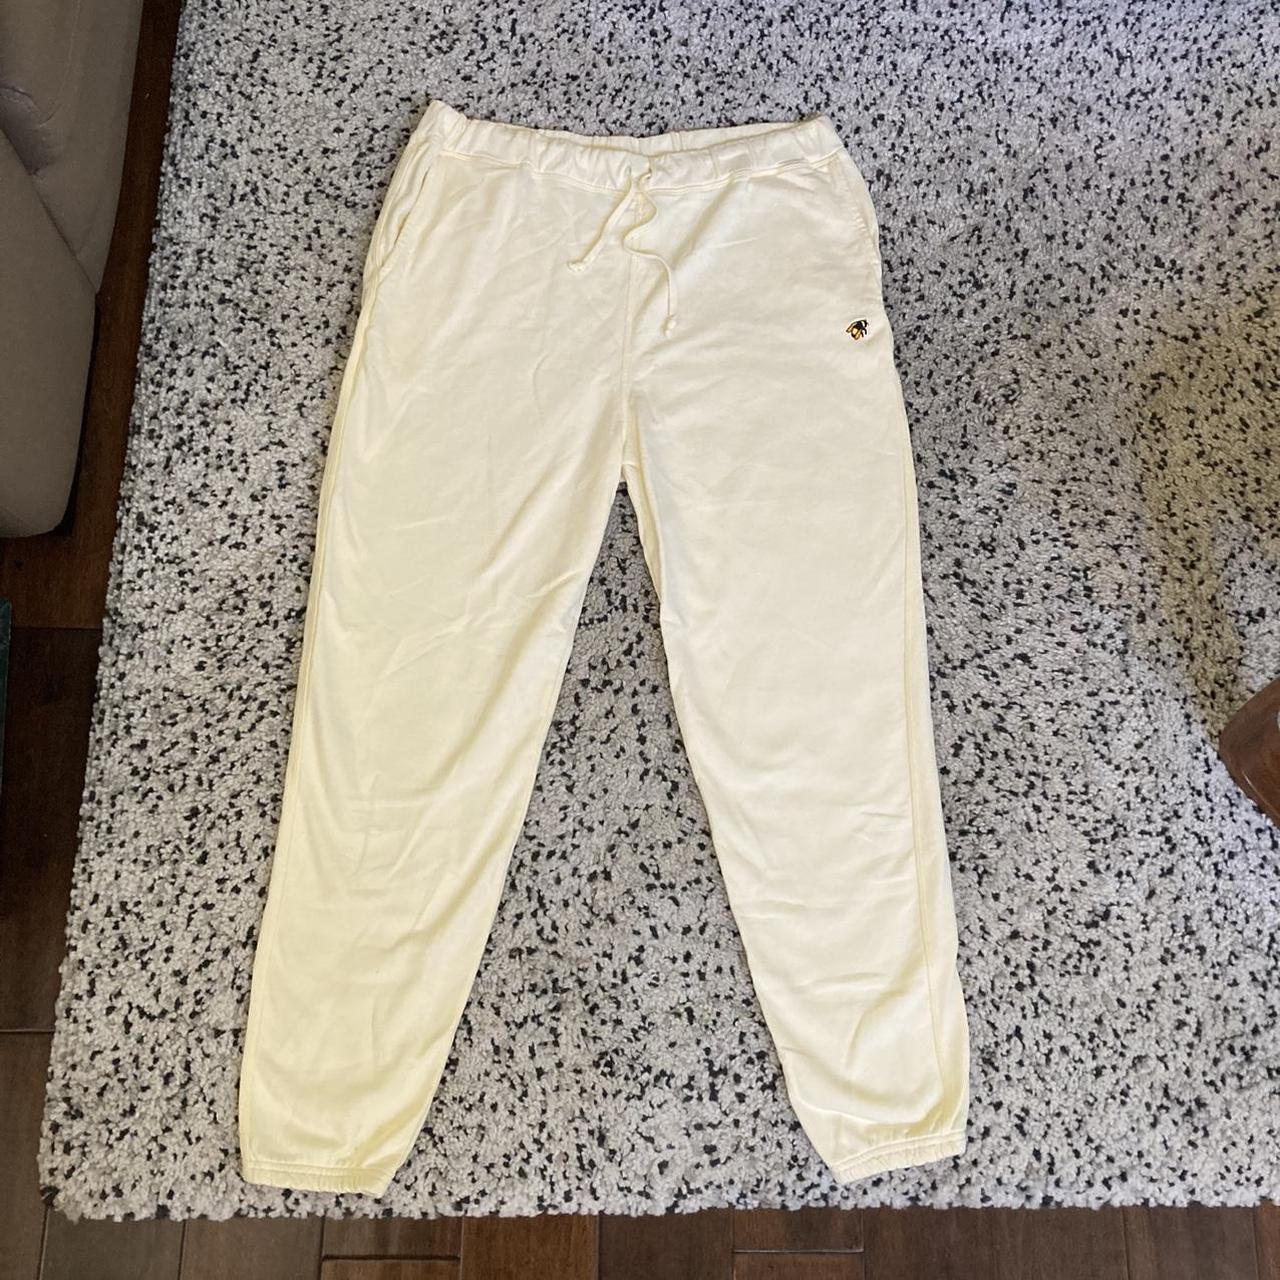 Product Image 1 - Yellow Golf Wang sweatpants. Pastel